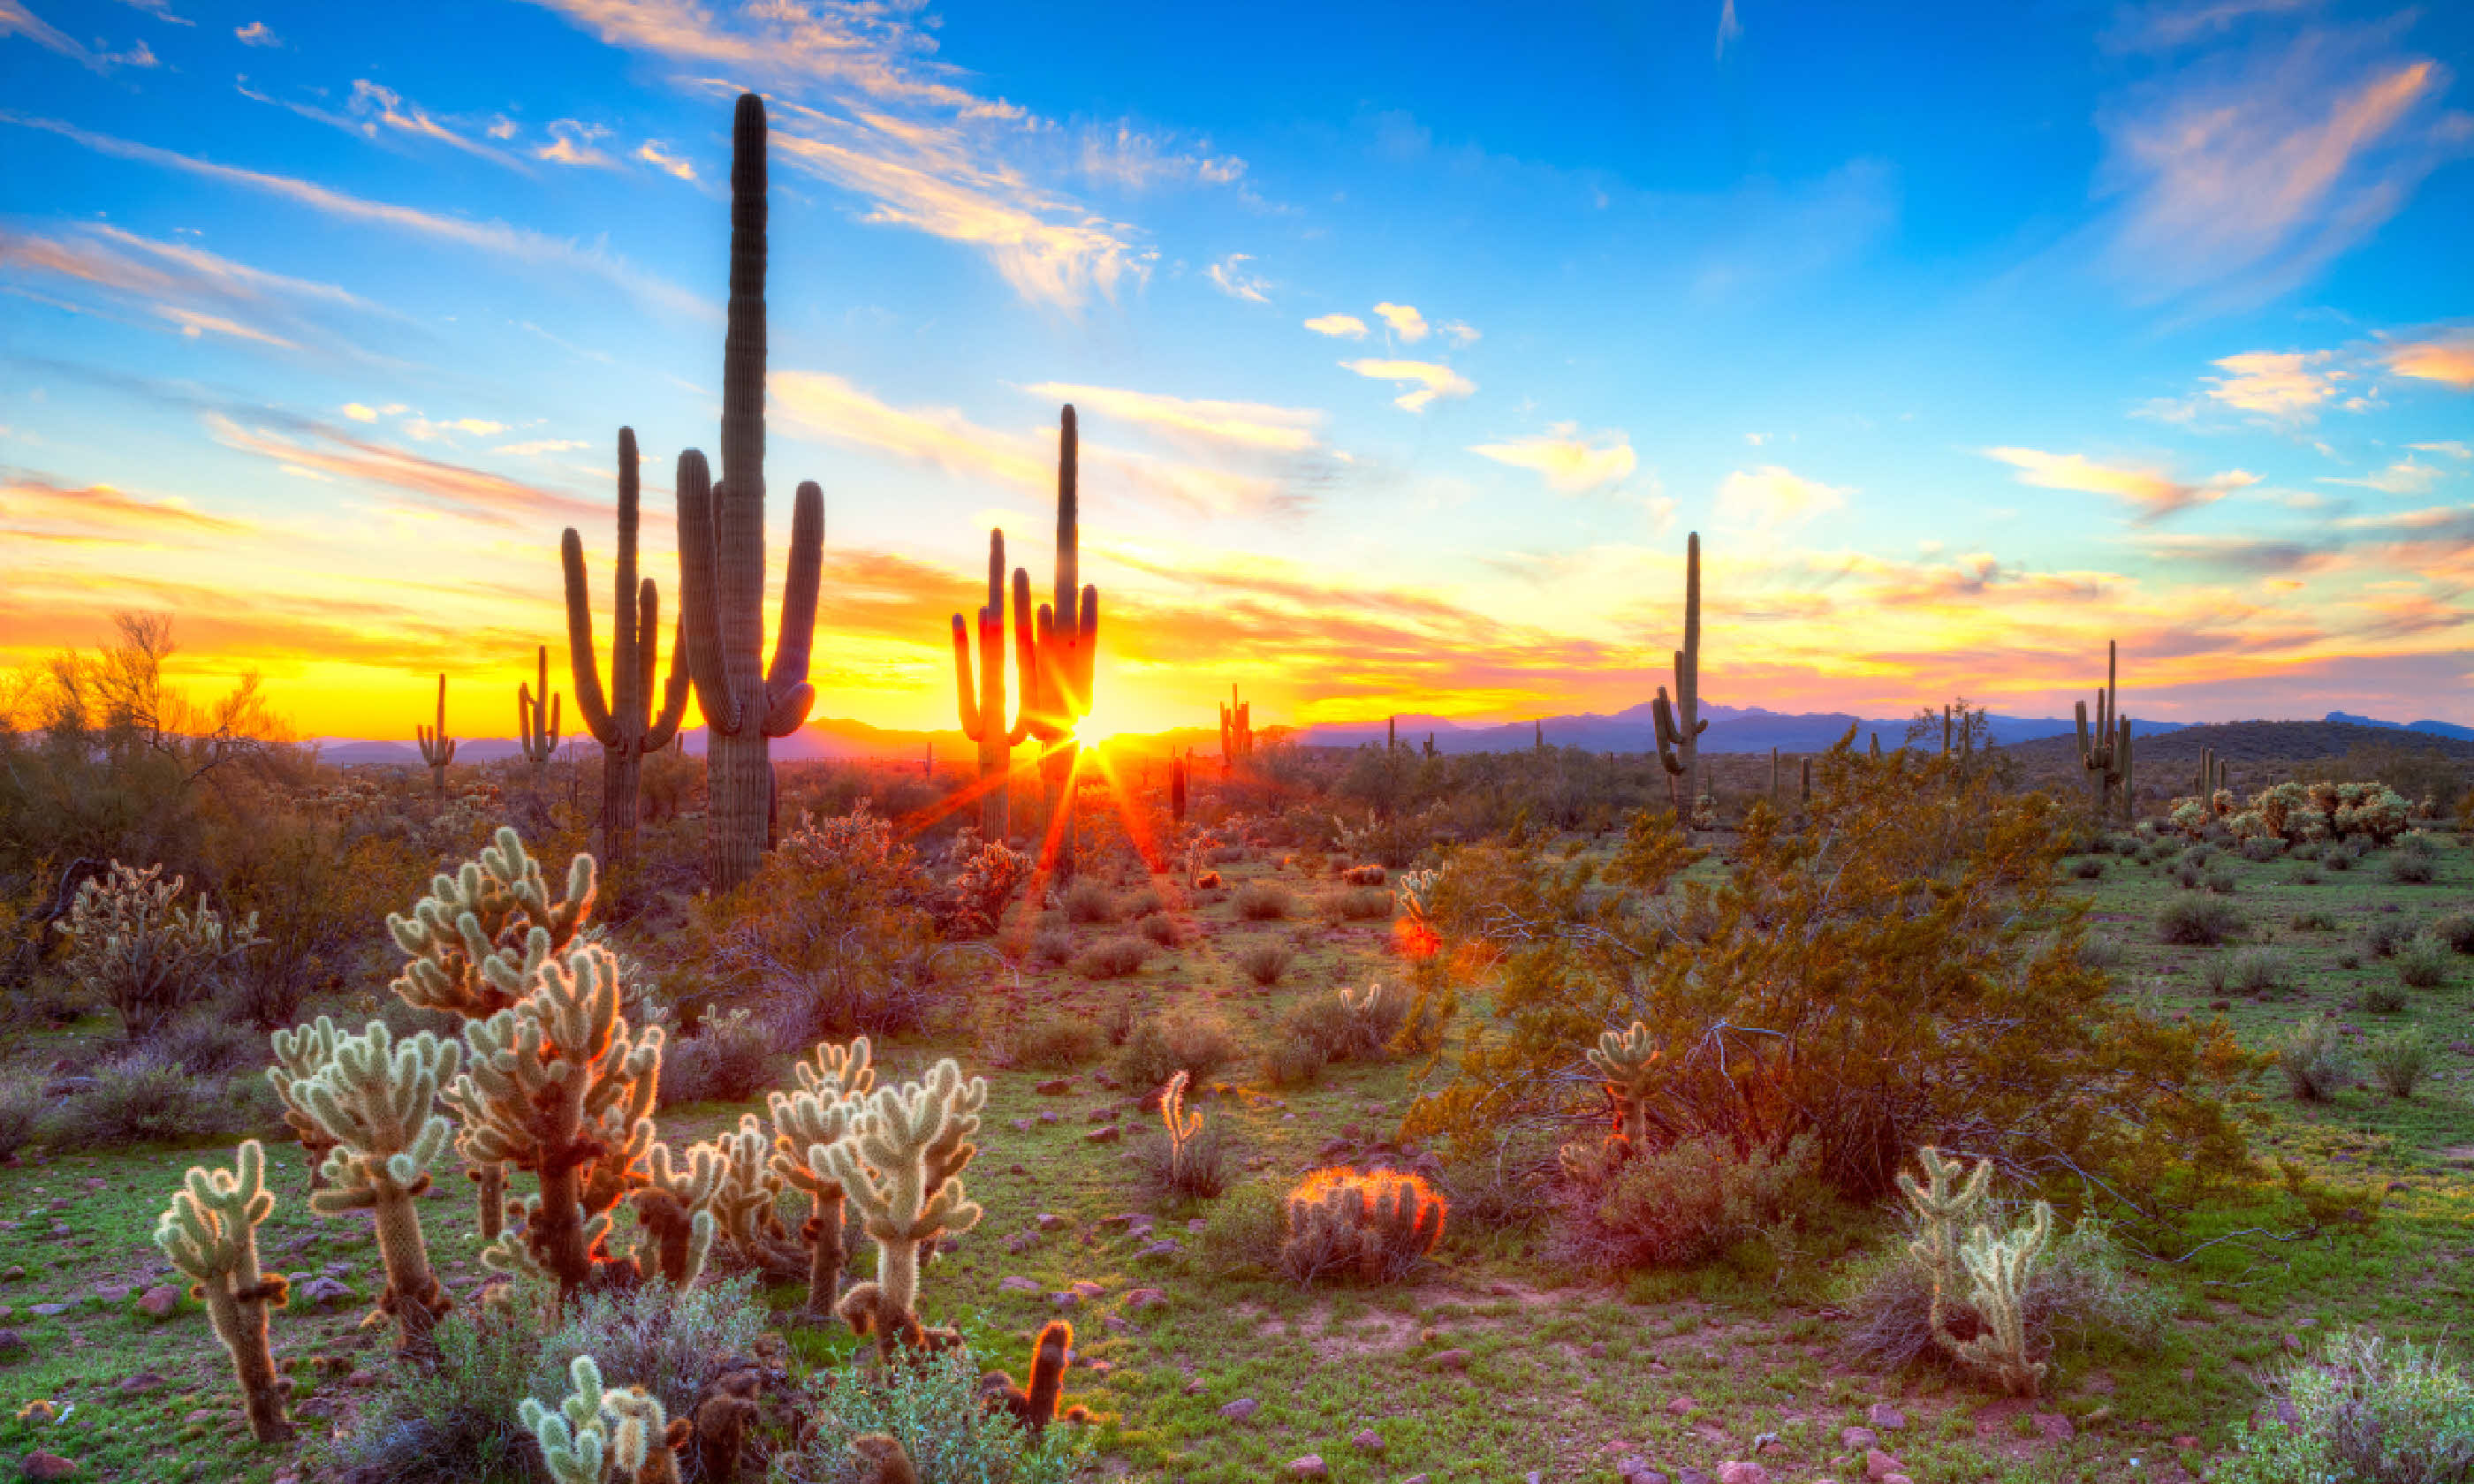 Sunset in Sonoran Desert (Shutterstock)